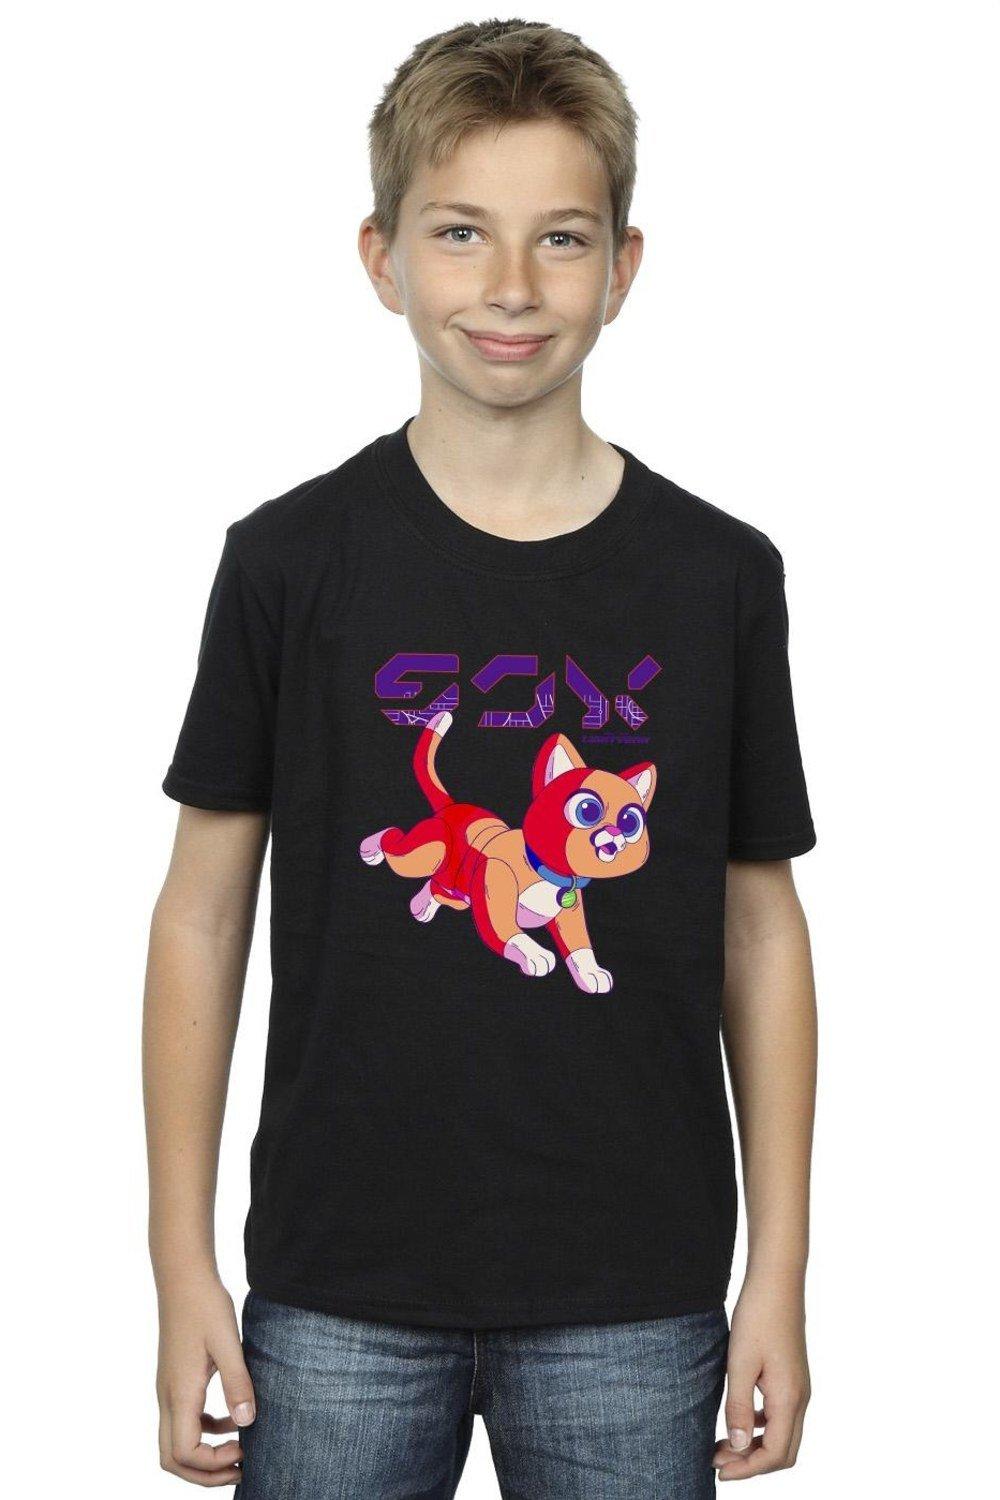 Lightyear Sox Digital Cute T-Shirt